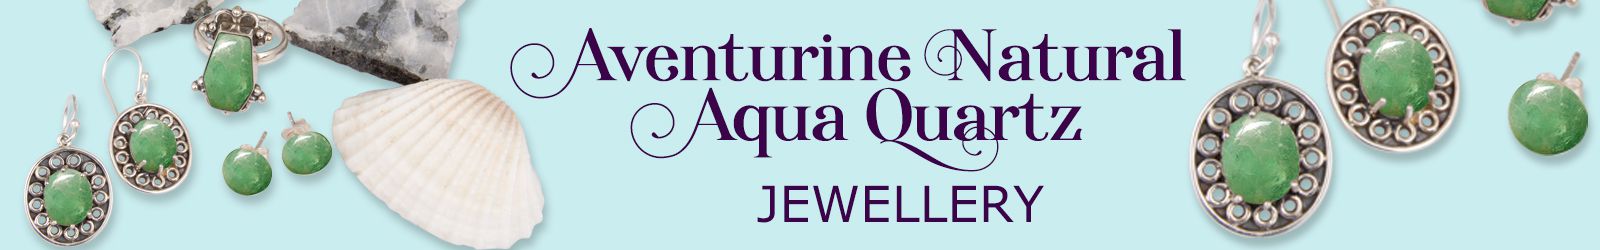 Silver Aventurine Natural Aqua Quartz Jewelry Wholesale Supplier